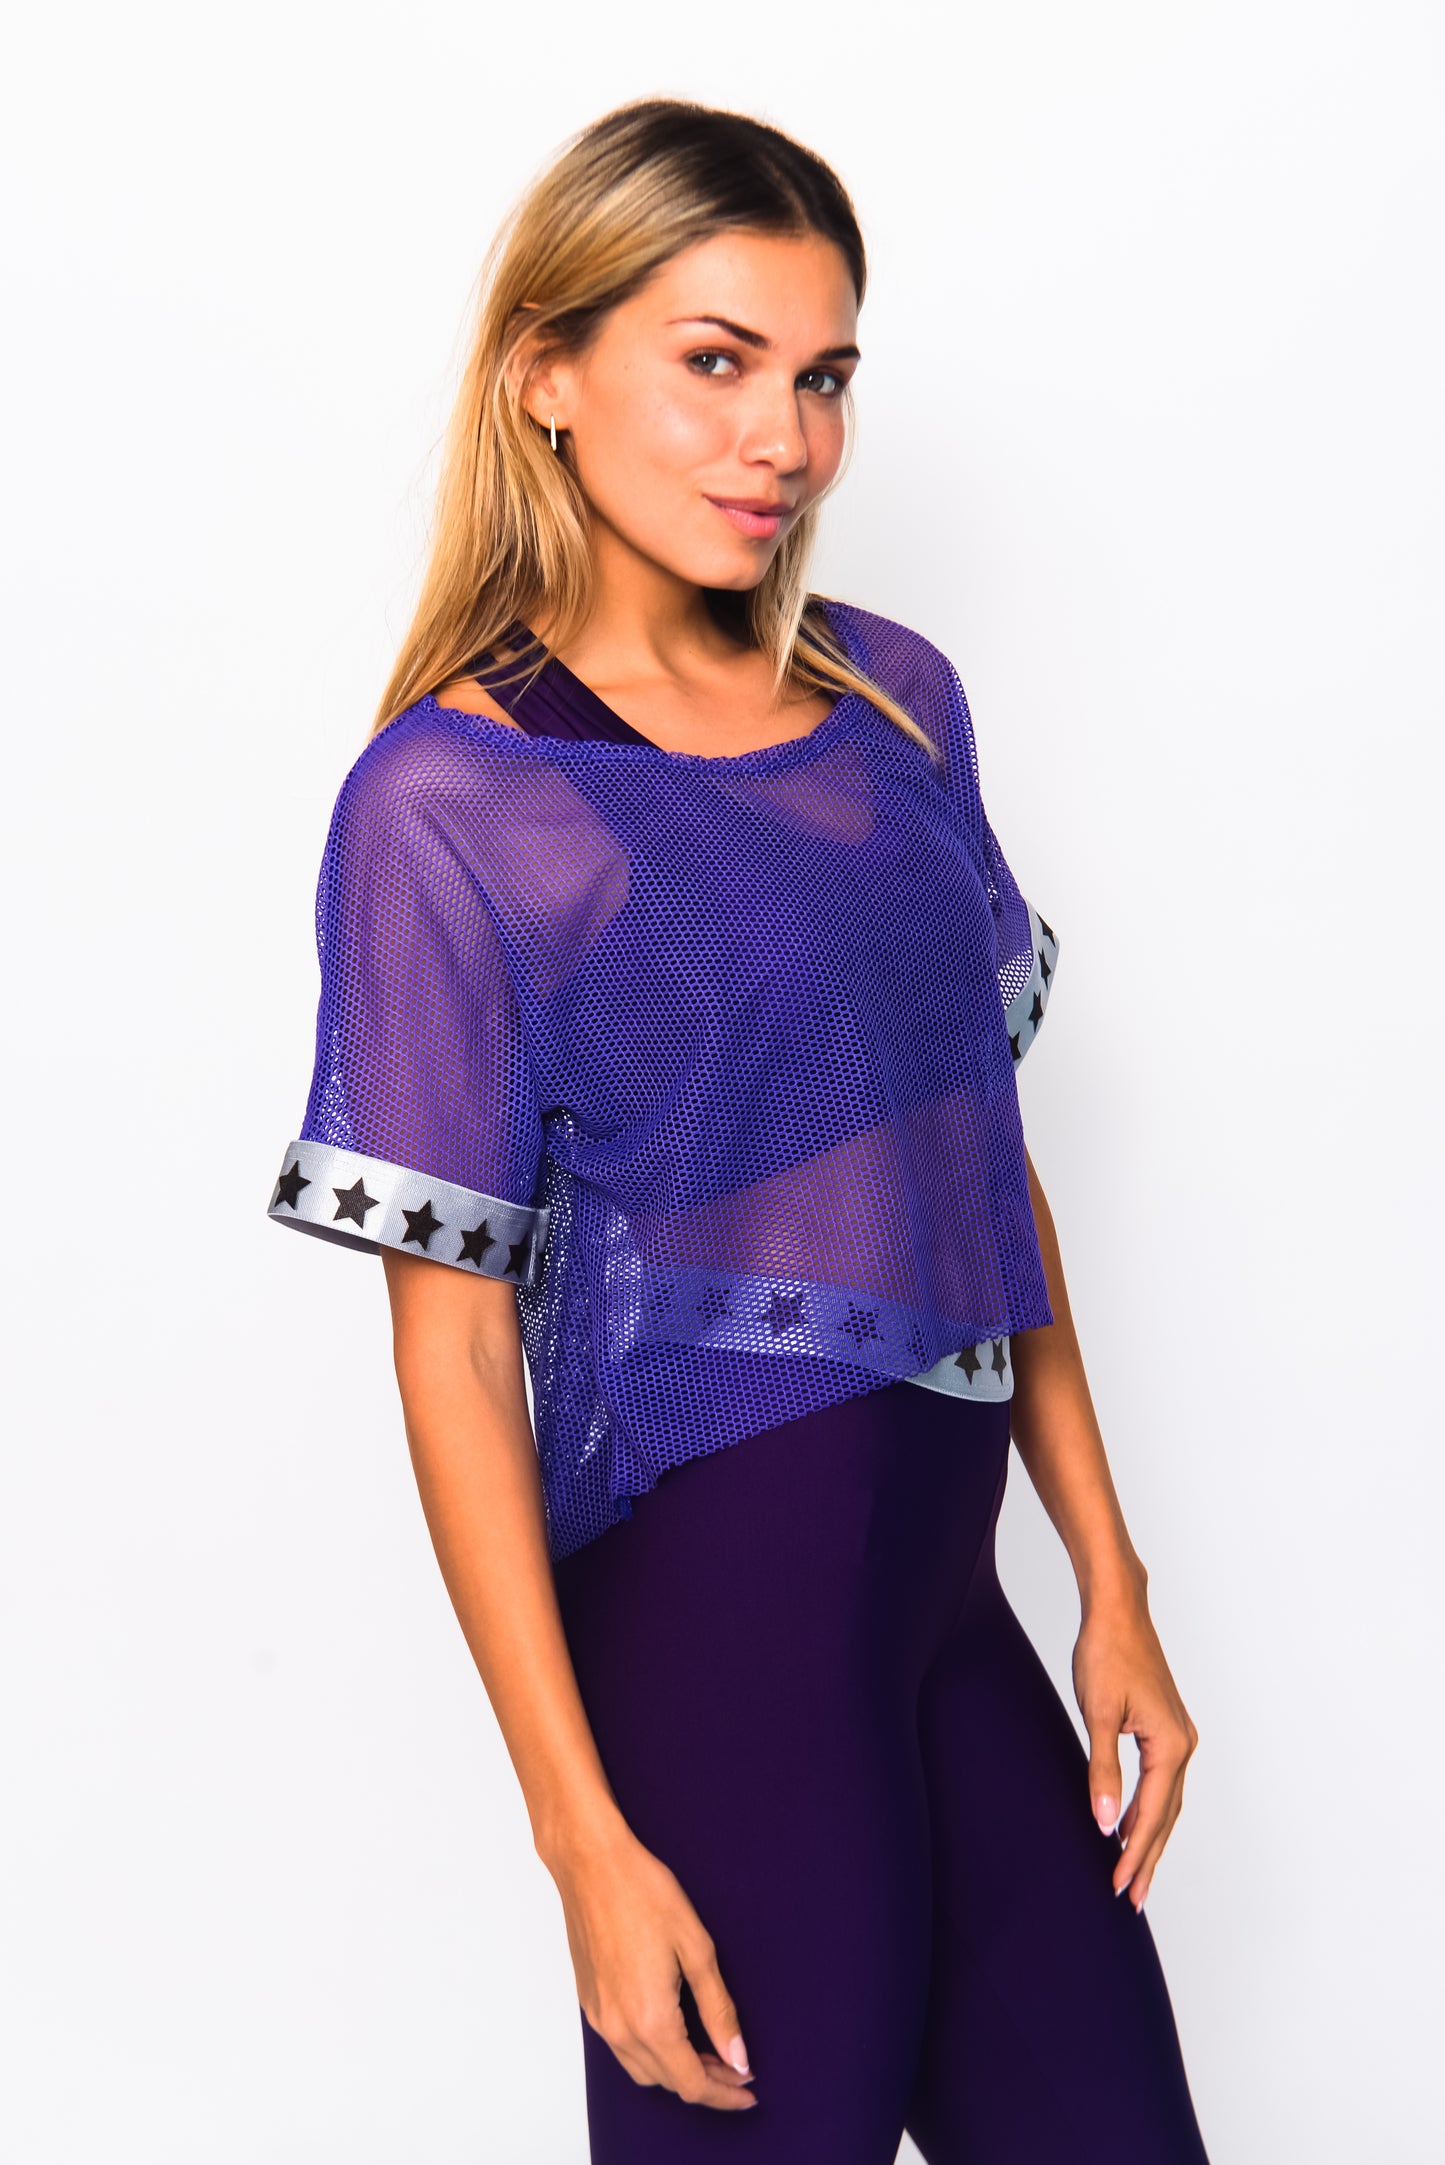 Stars neon purple activewear 3 pieces set